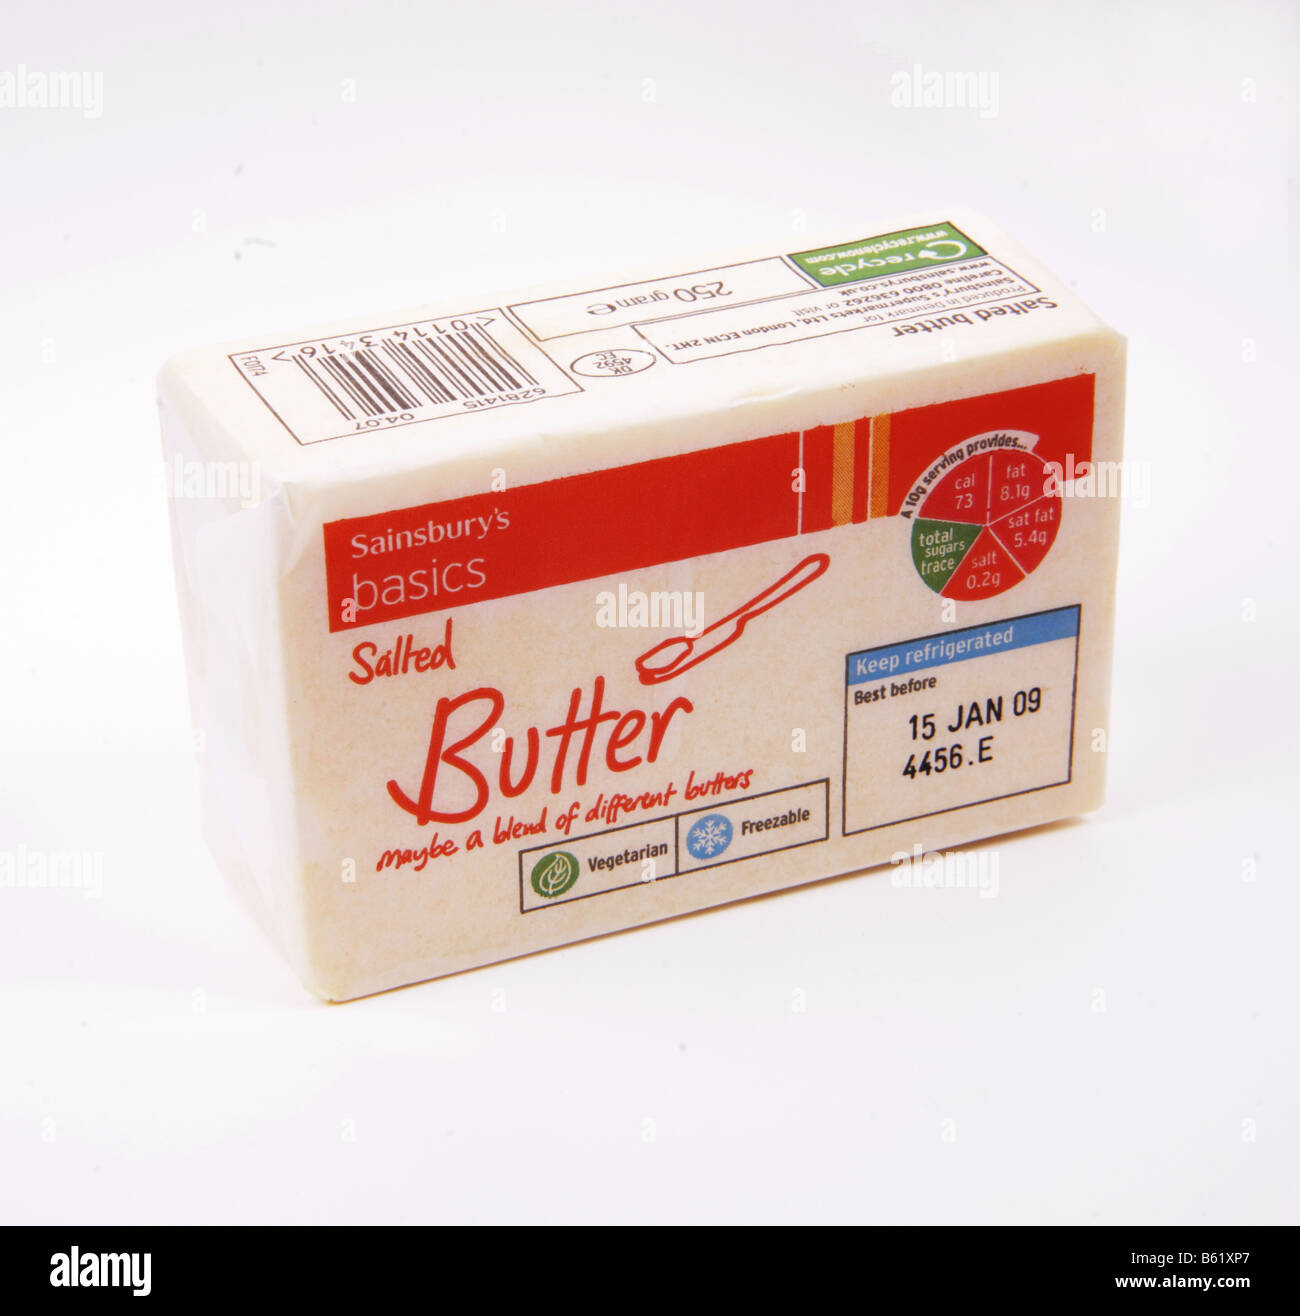 Sainsburys Basic Range Salted Butter Stock Photo